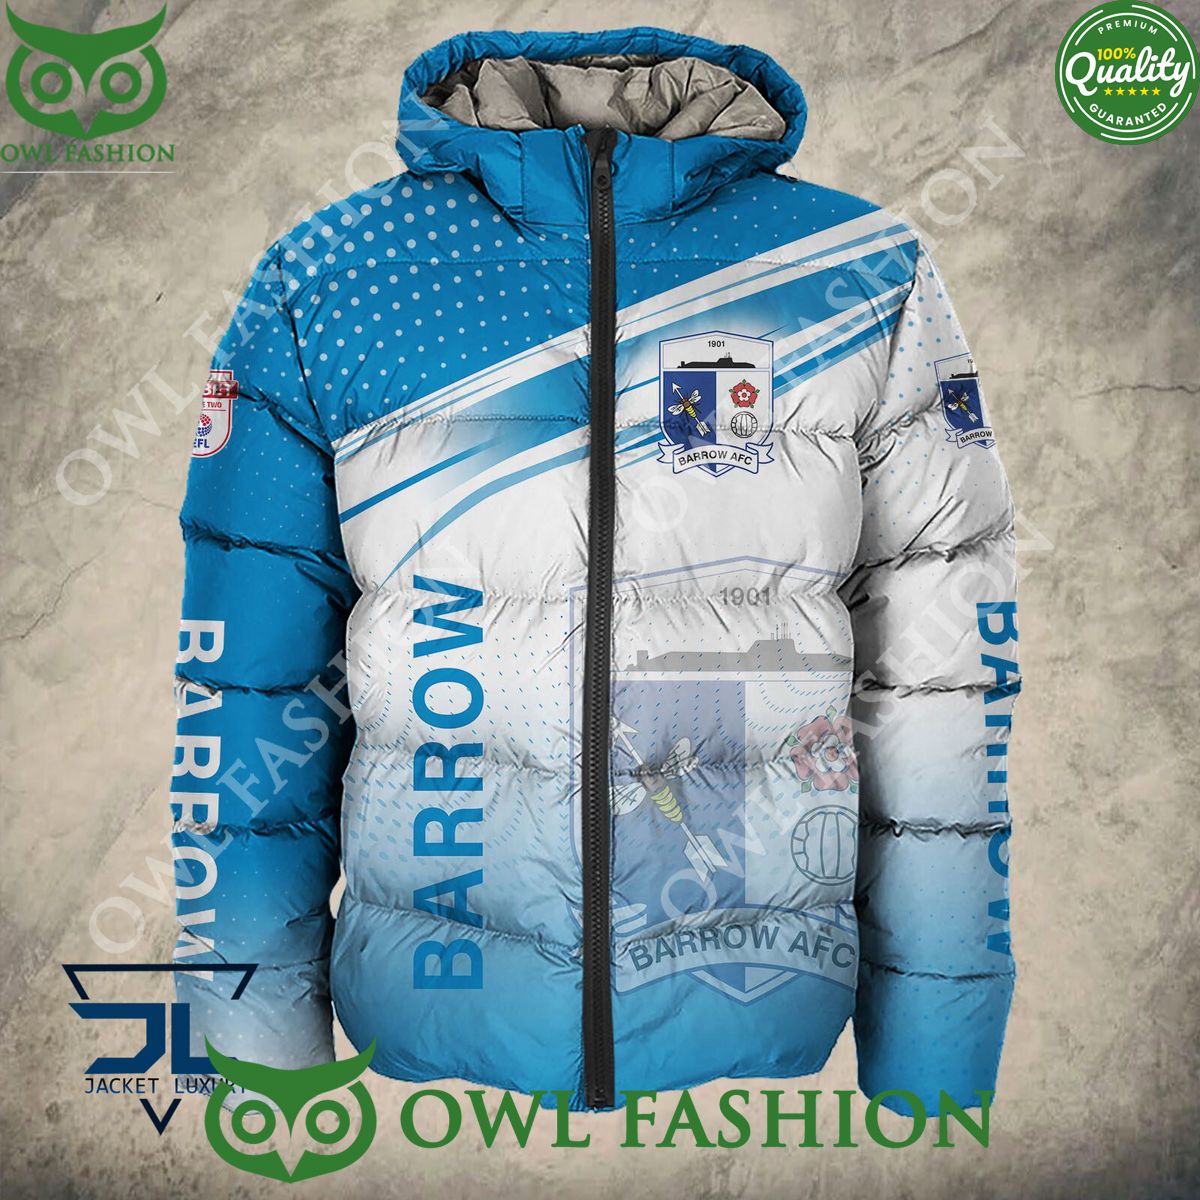 barrow afc trending design league two hoodie shirt 7 uU8eB.jpg